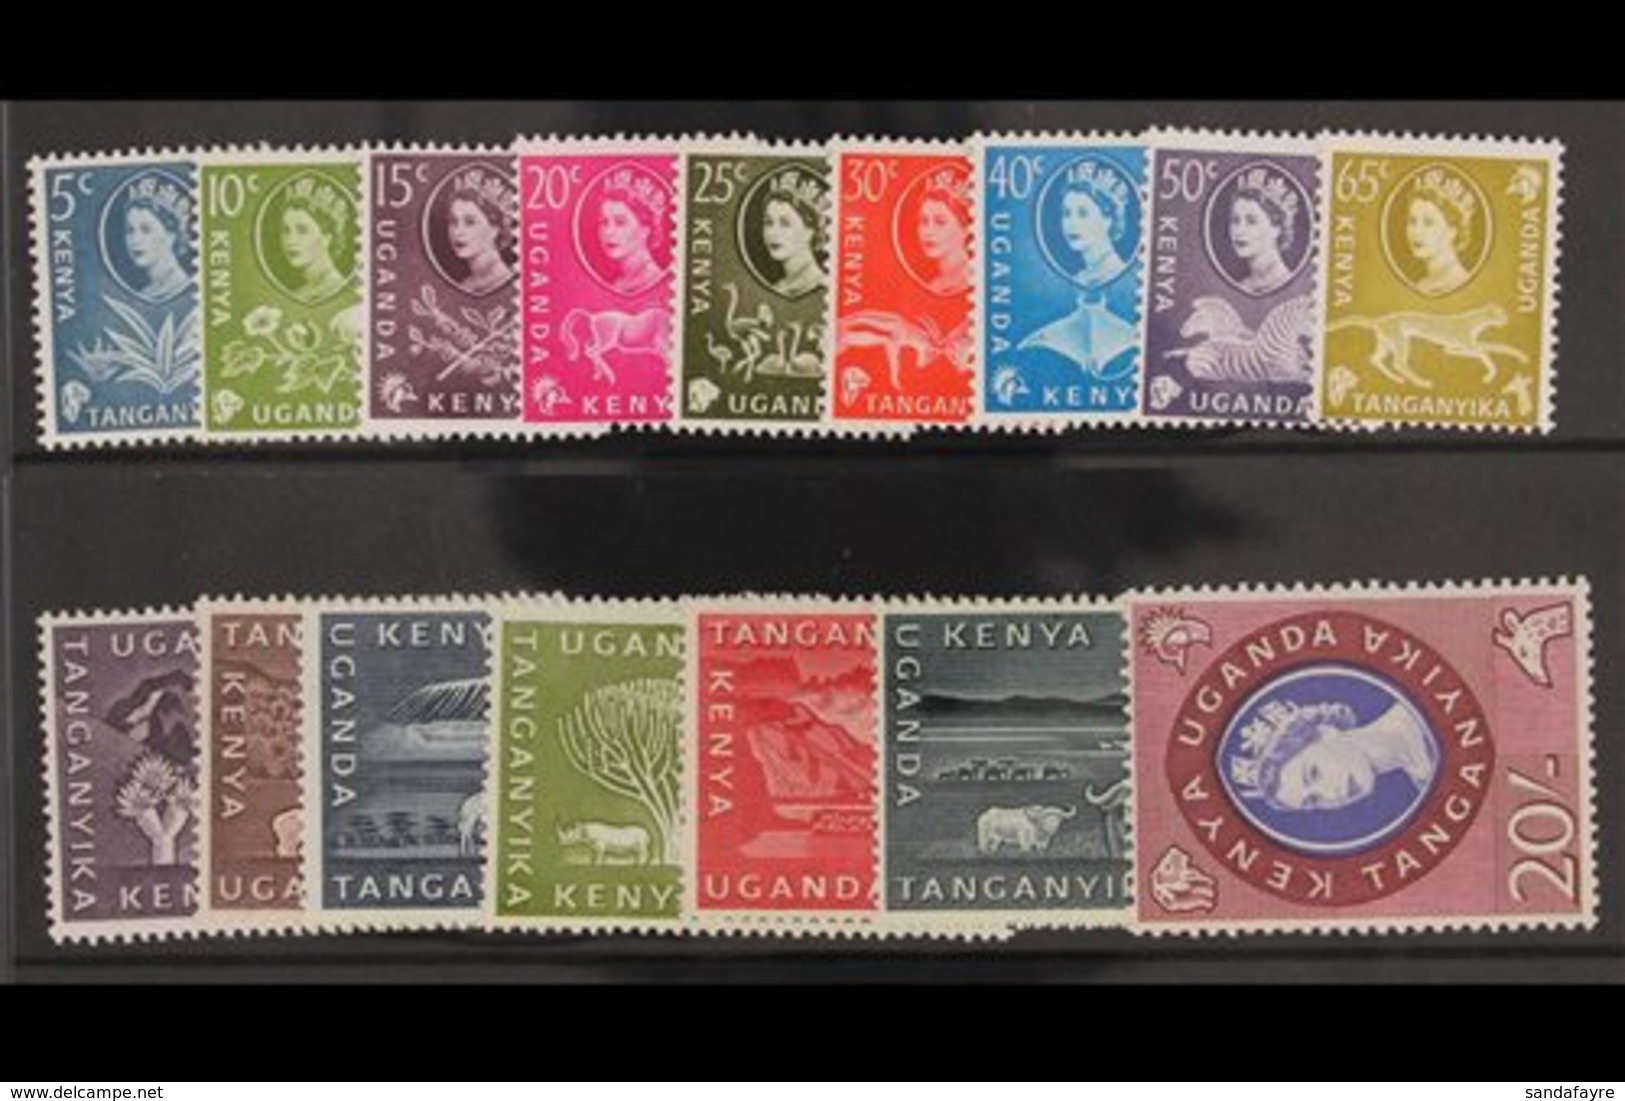 1960-62  Complete Definitive Set, SG183/198, Fine Never Hinged Mint. (16 Stamps) For More Images, Please Visit Http://ww - Vide